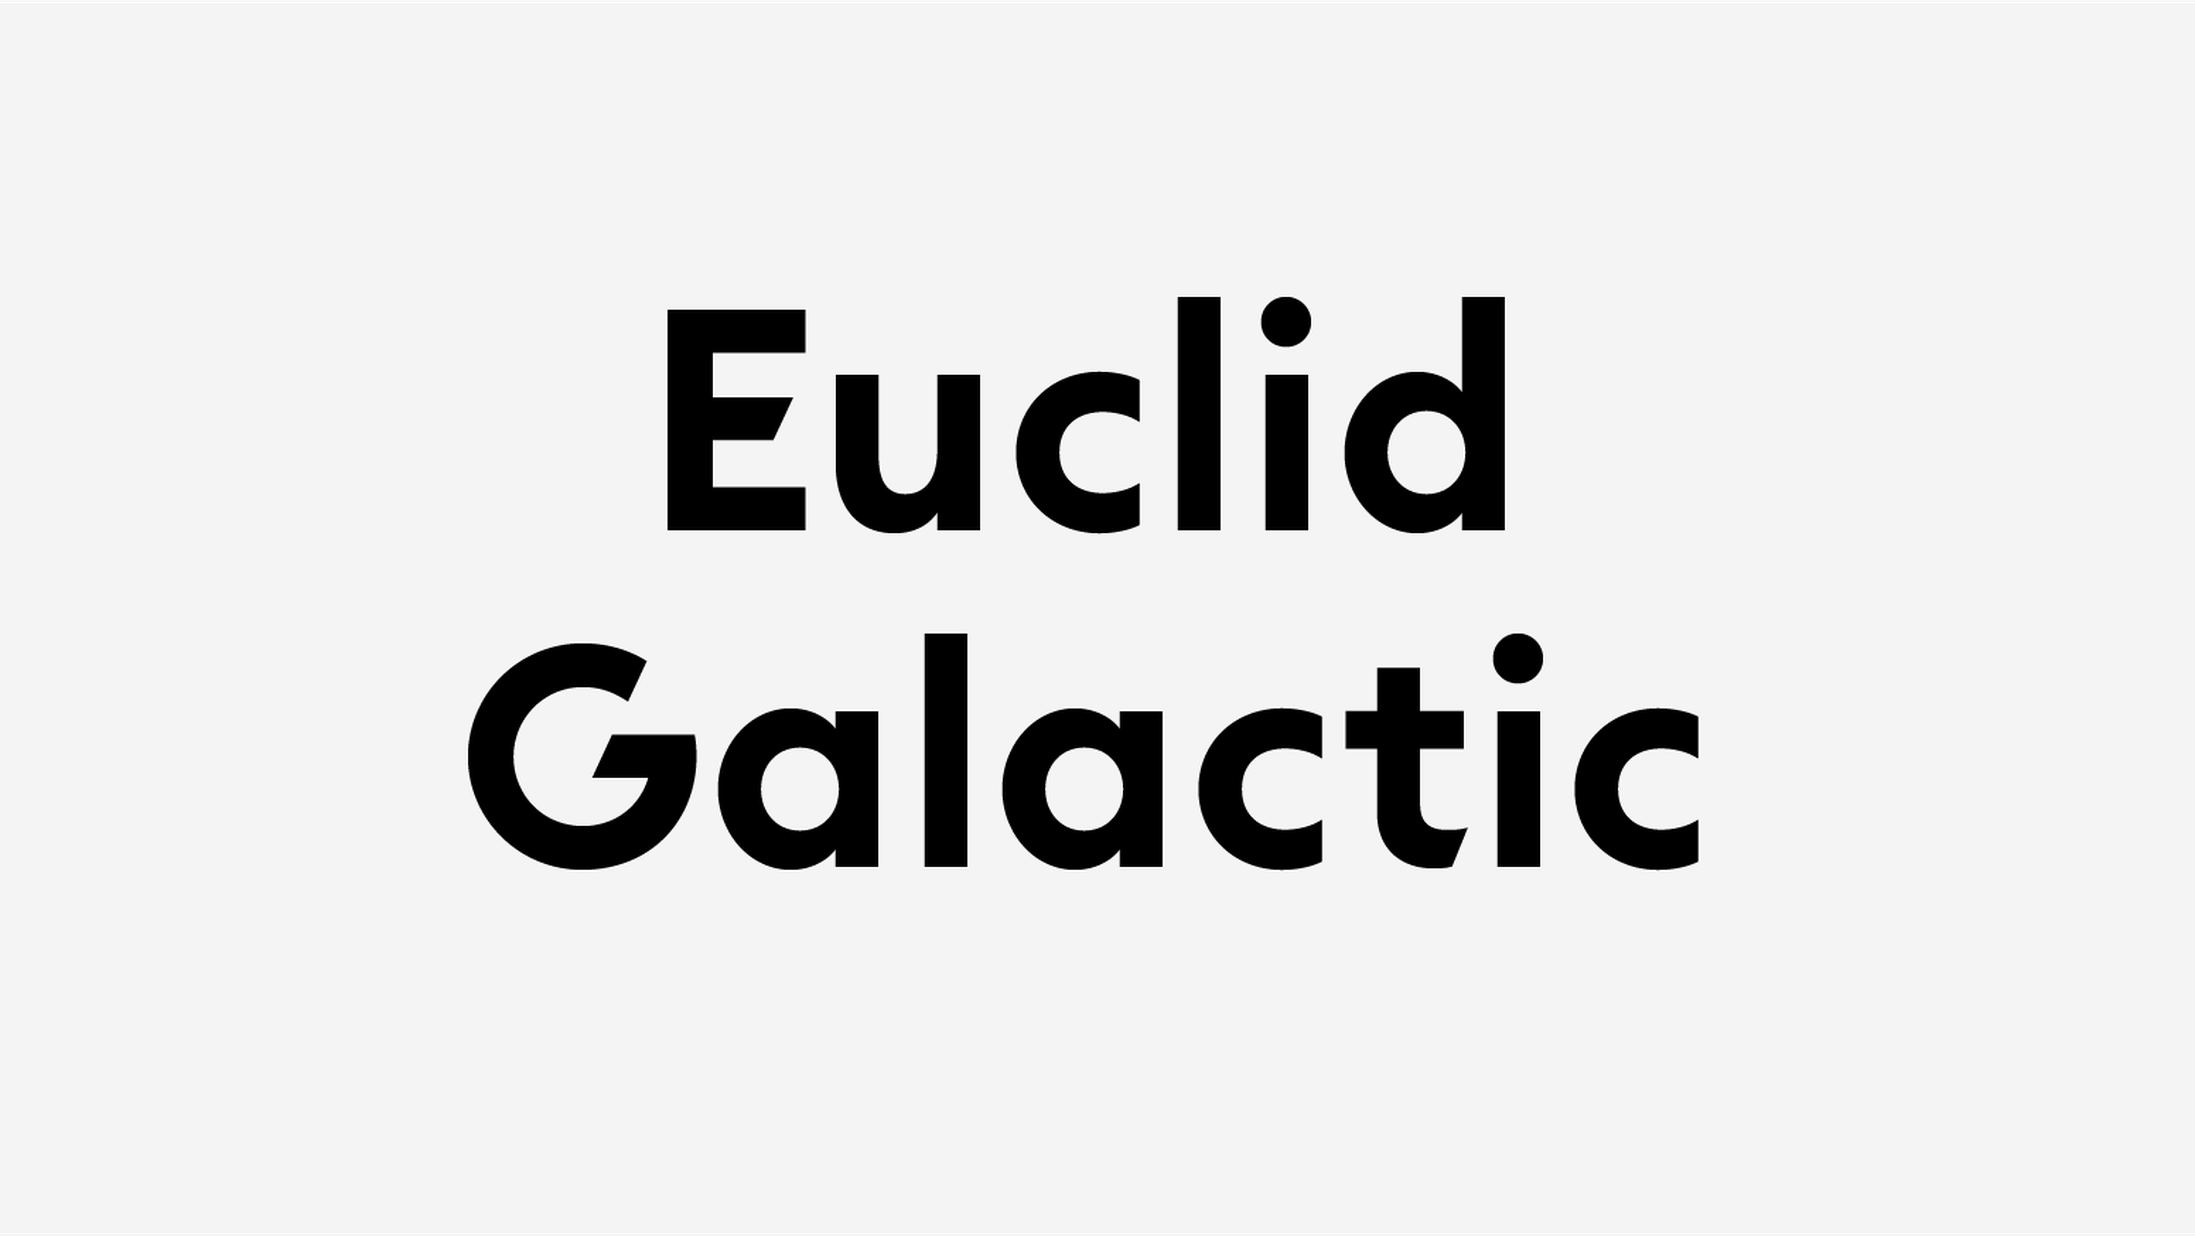 Police Euclid Galactic